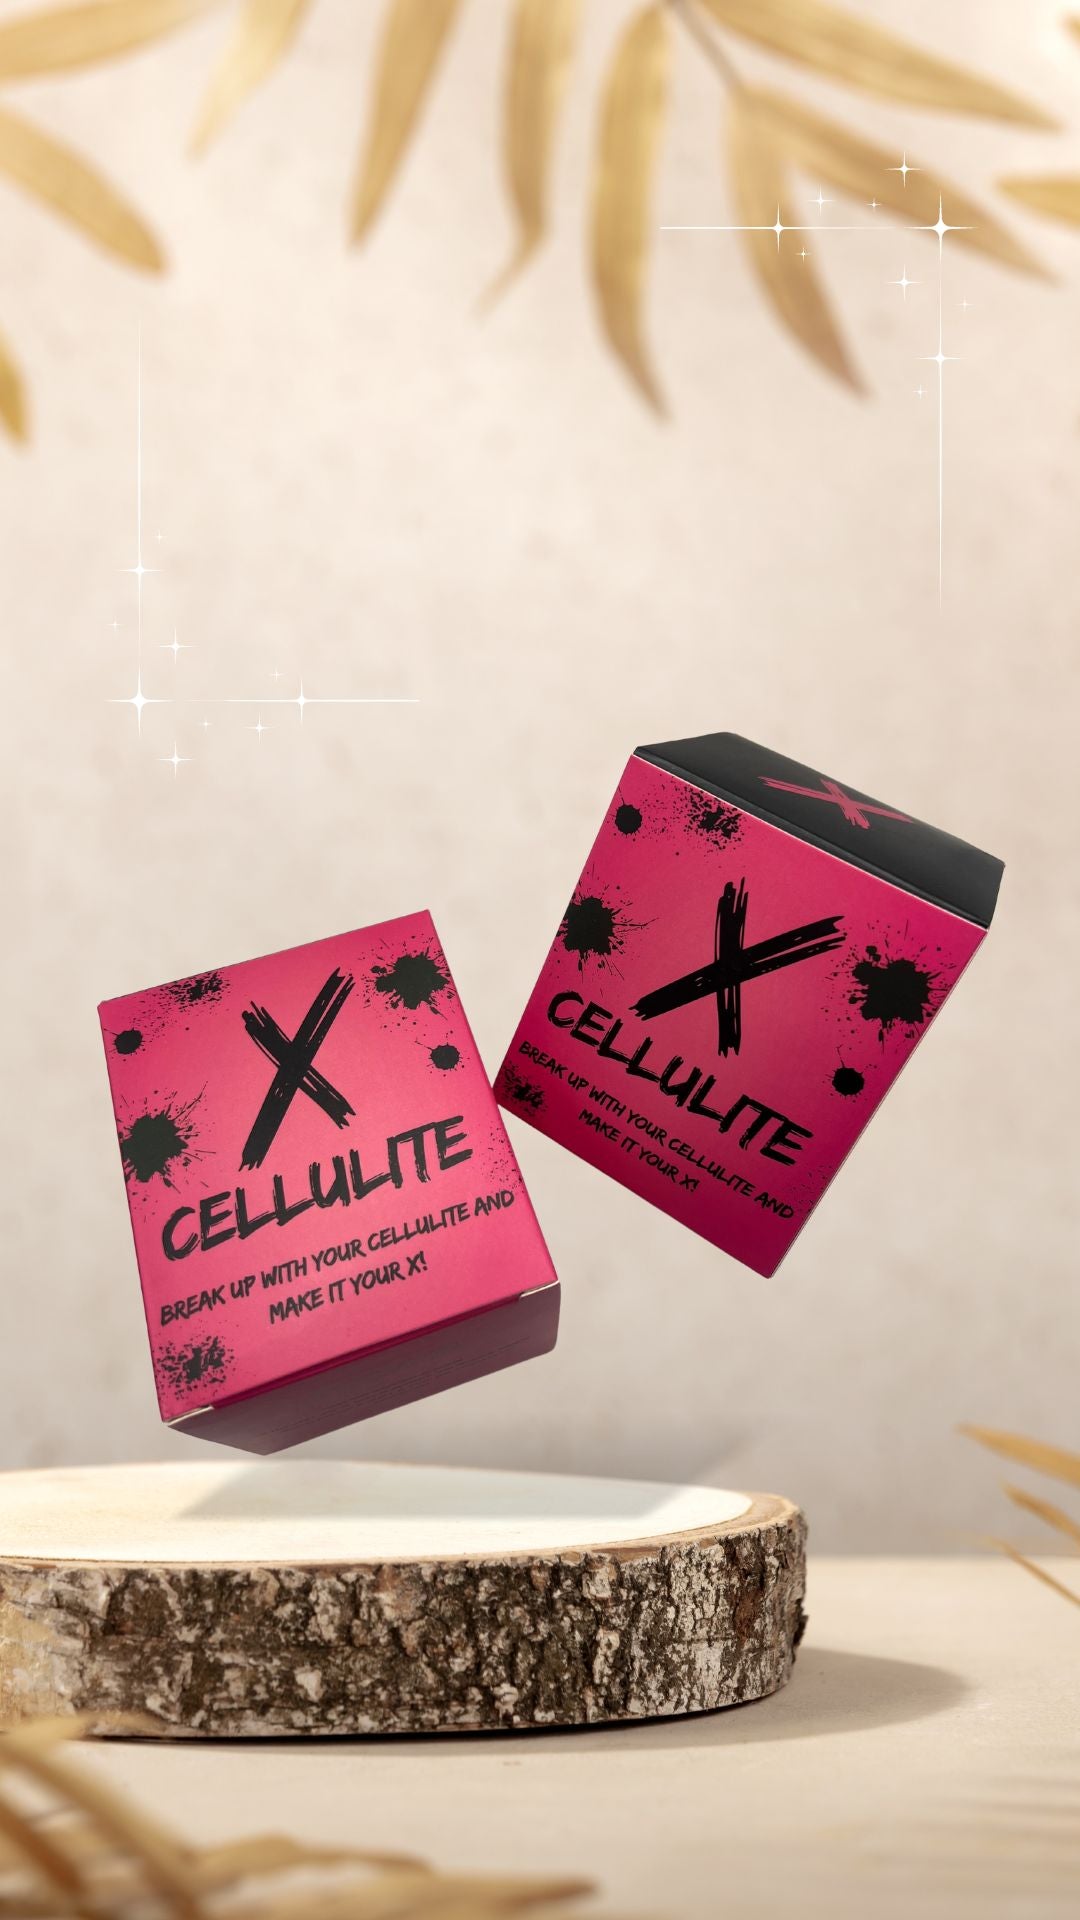 X Cellulite - 250g